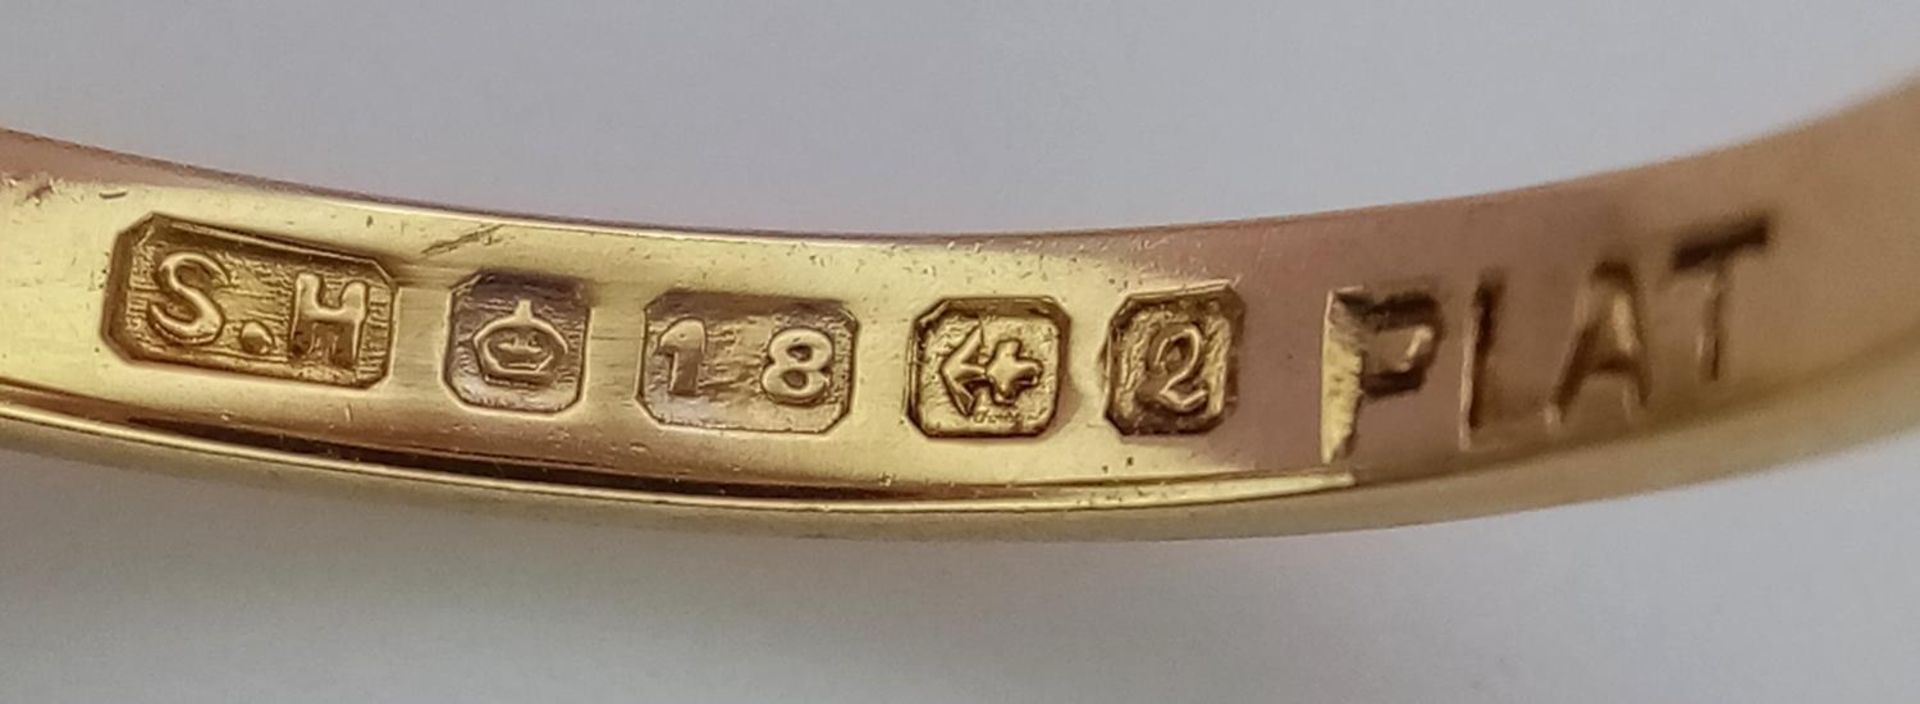 A 18K YELLOW GOLD & PLATINUM DIAMOND SOLITAIRE RING 0.15CT 2.6G SIZE M/N SPAS 9001 - Bild 5 aus 5